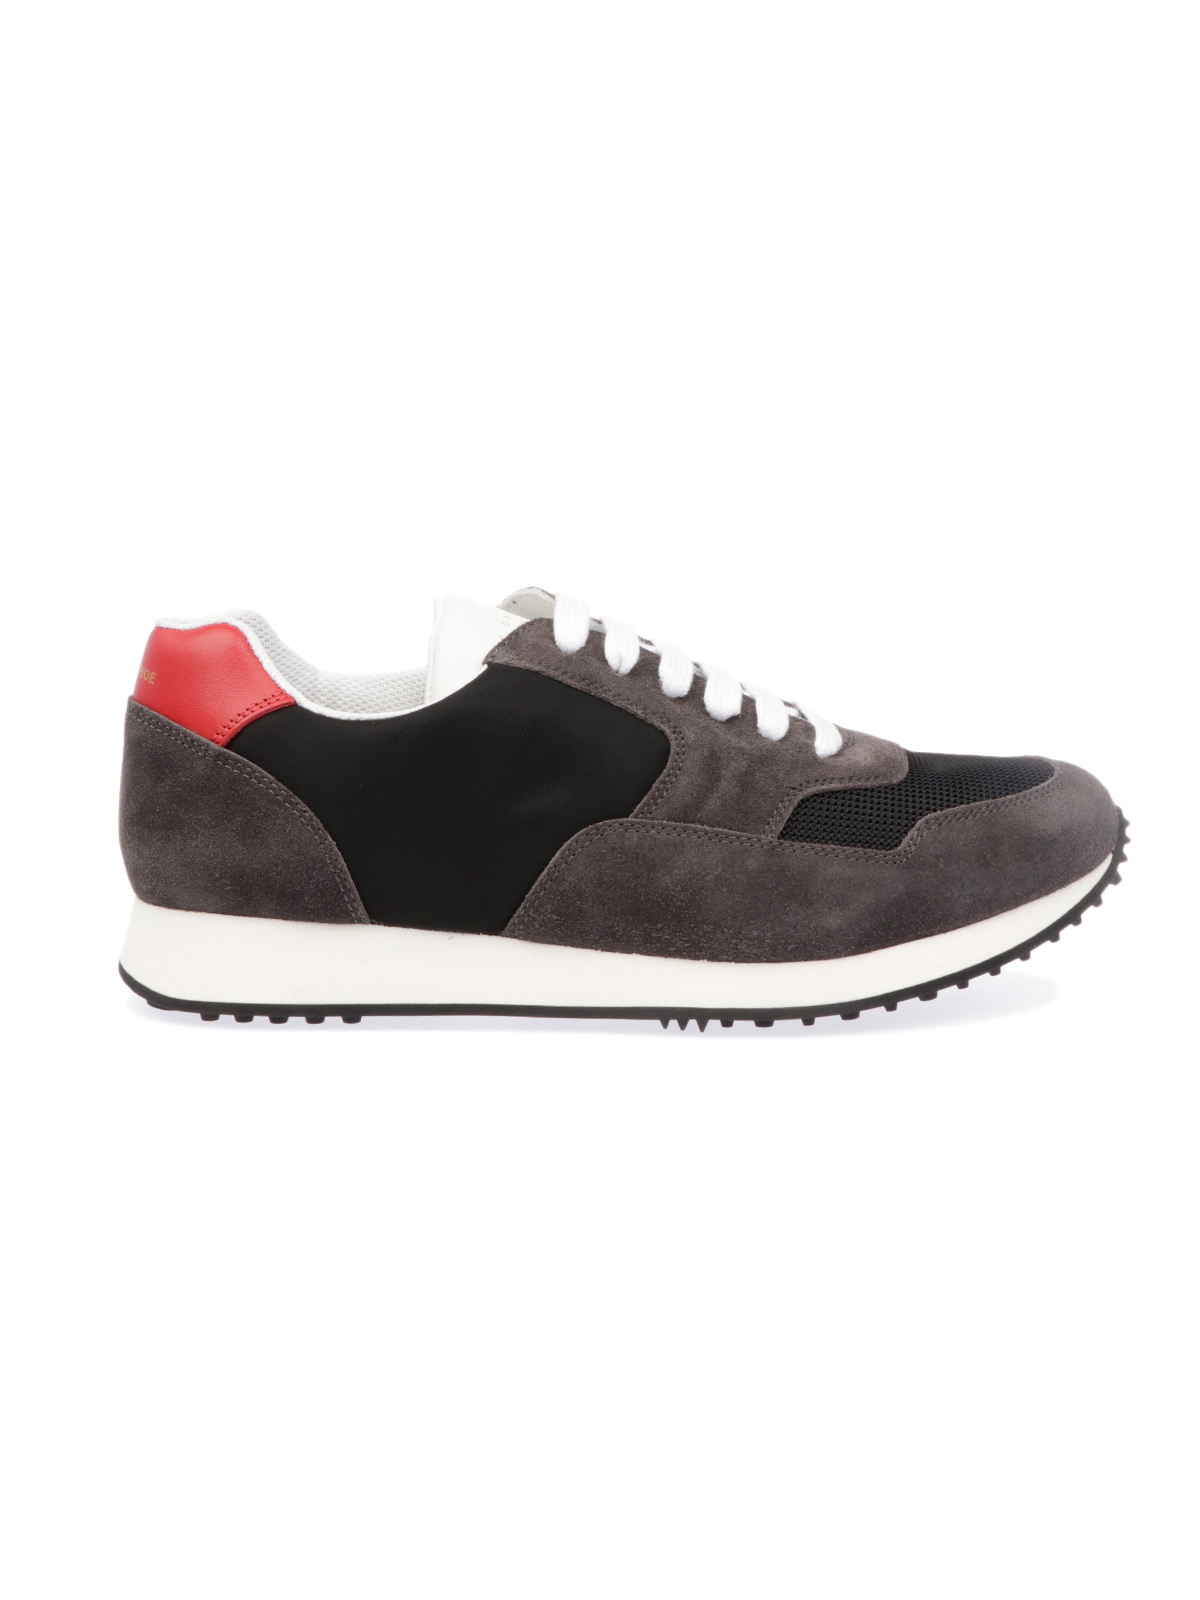 CAR SHOE Men's Suede Sneakers F0Q12 | KUE935 | Botta \u0026 B Online Store